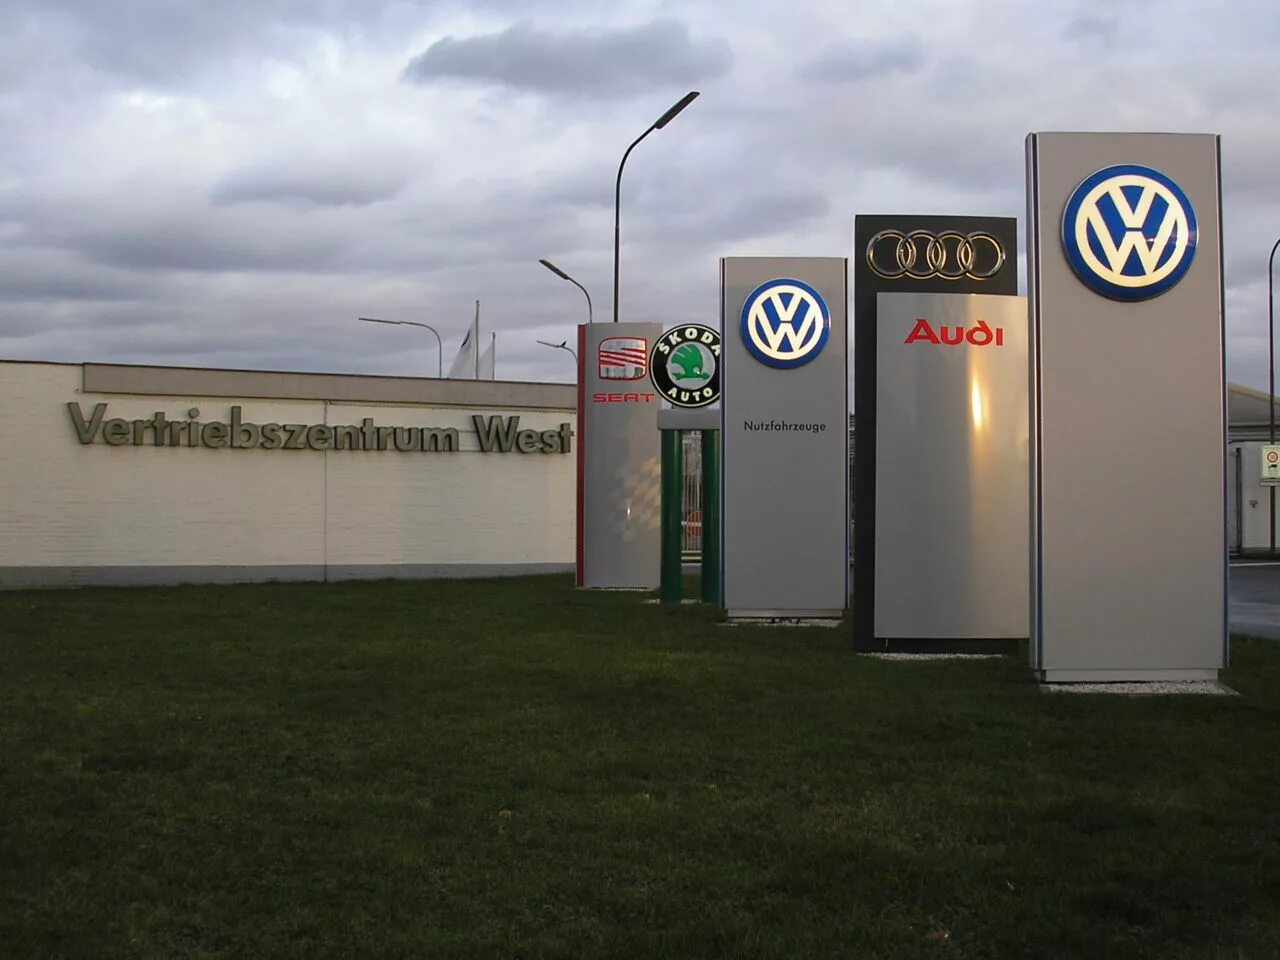 Концерн VW Group. Volkswagen Group a5. Дочерние компании Фольксваген групп. Концерн Ауди Фольксваген. Volkswagen групп